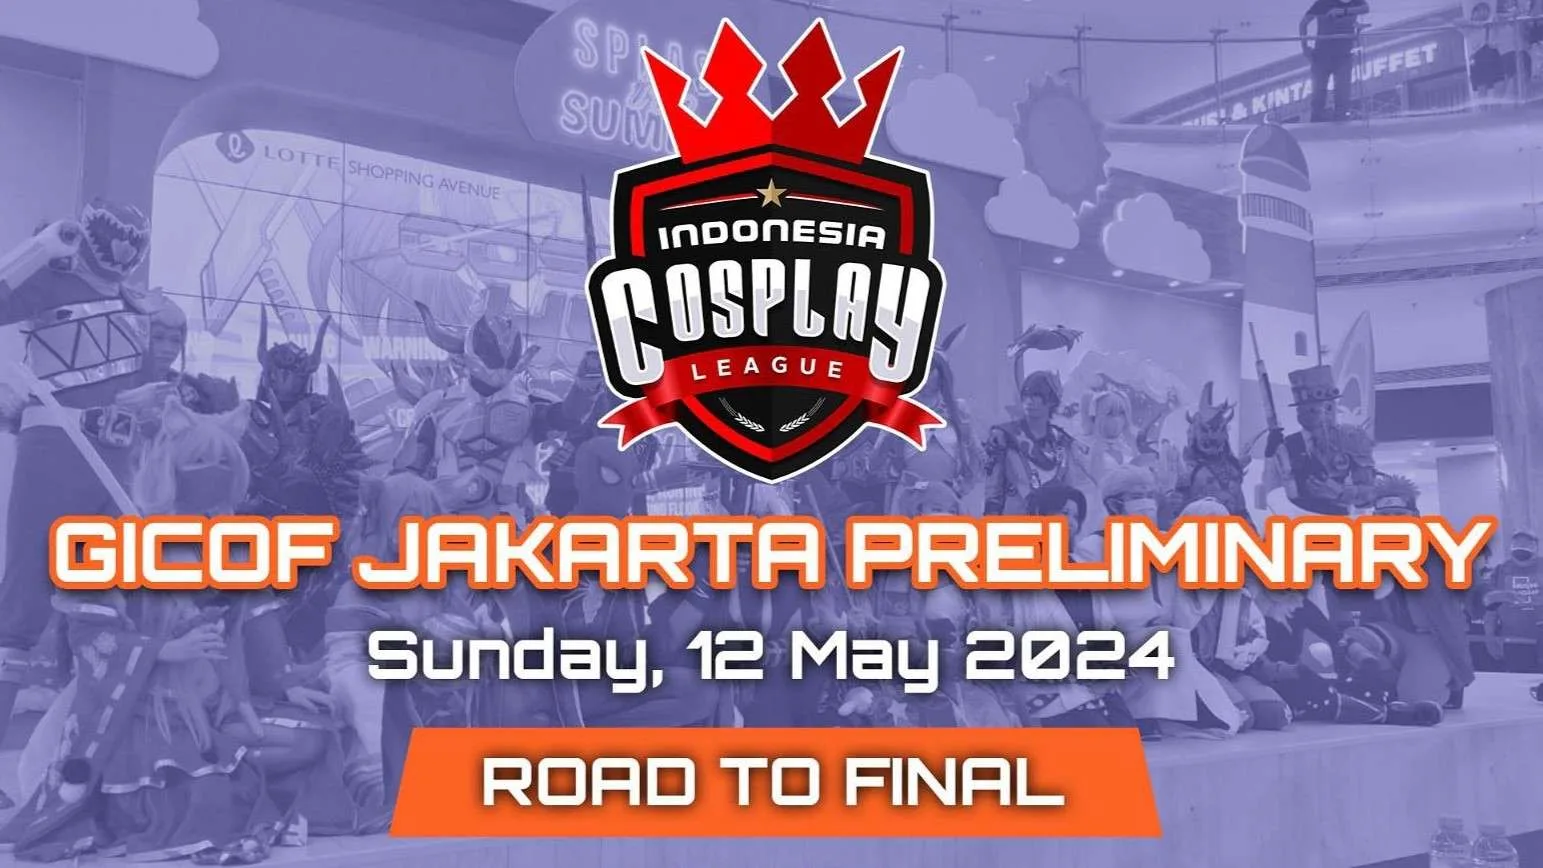 GICOF Jakarta Preliminary 2024